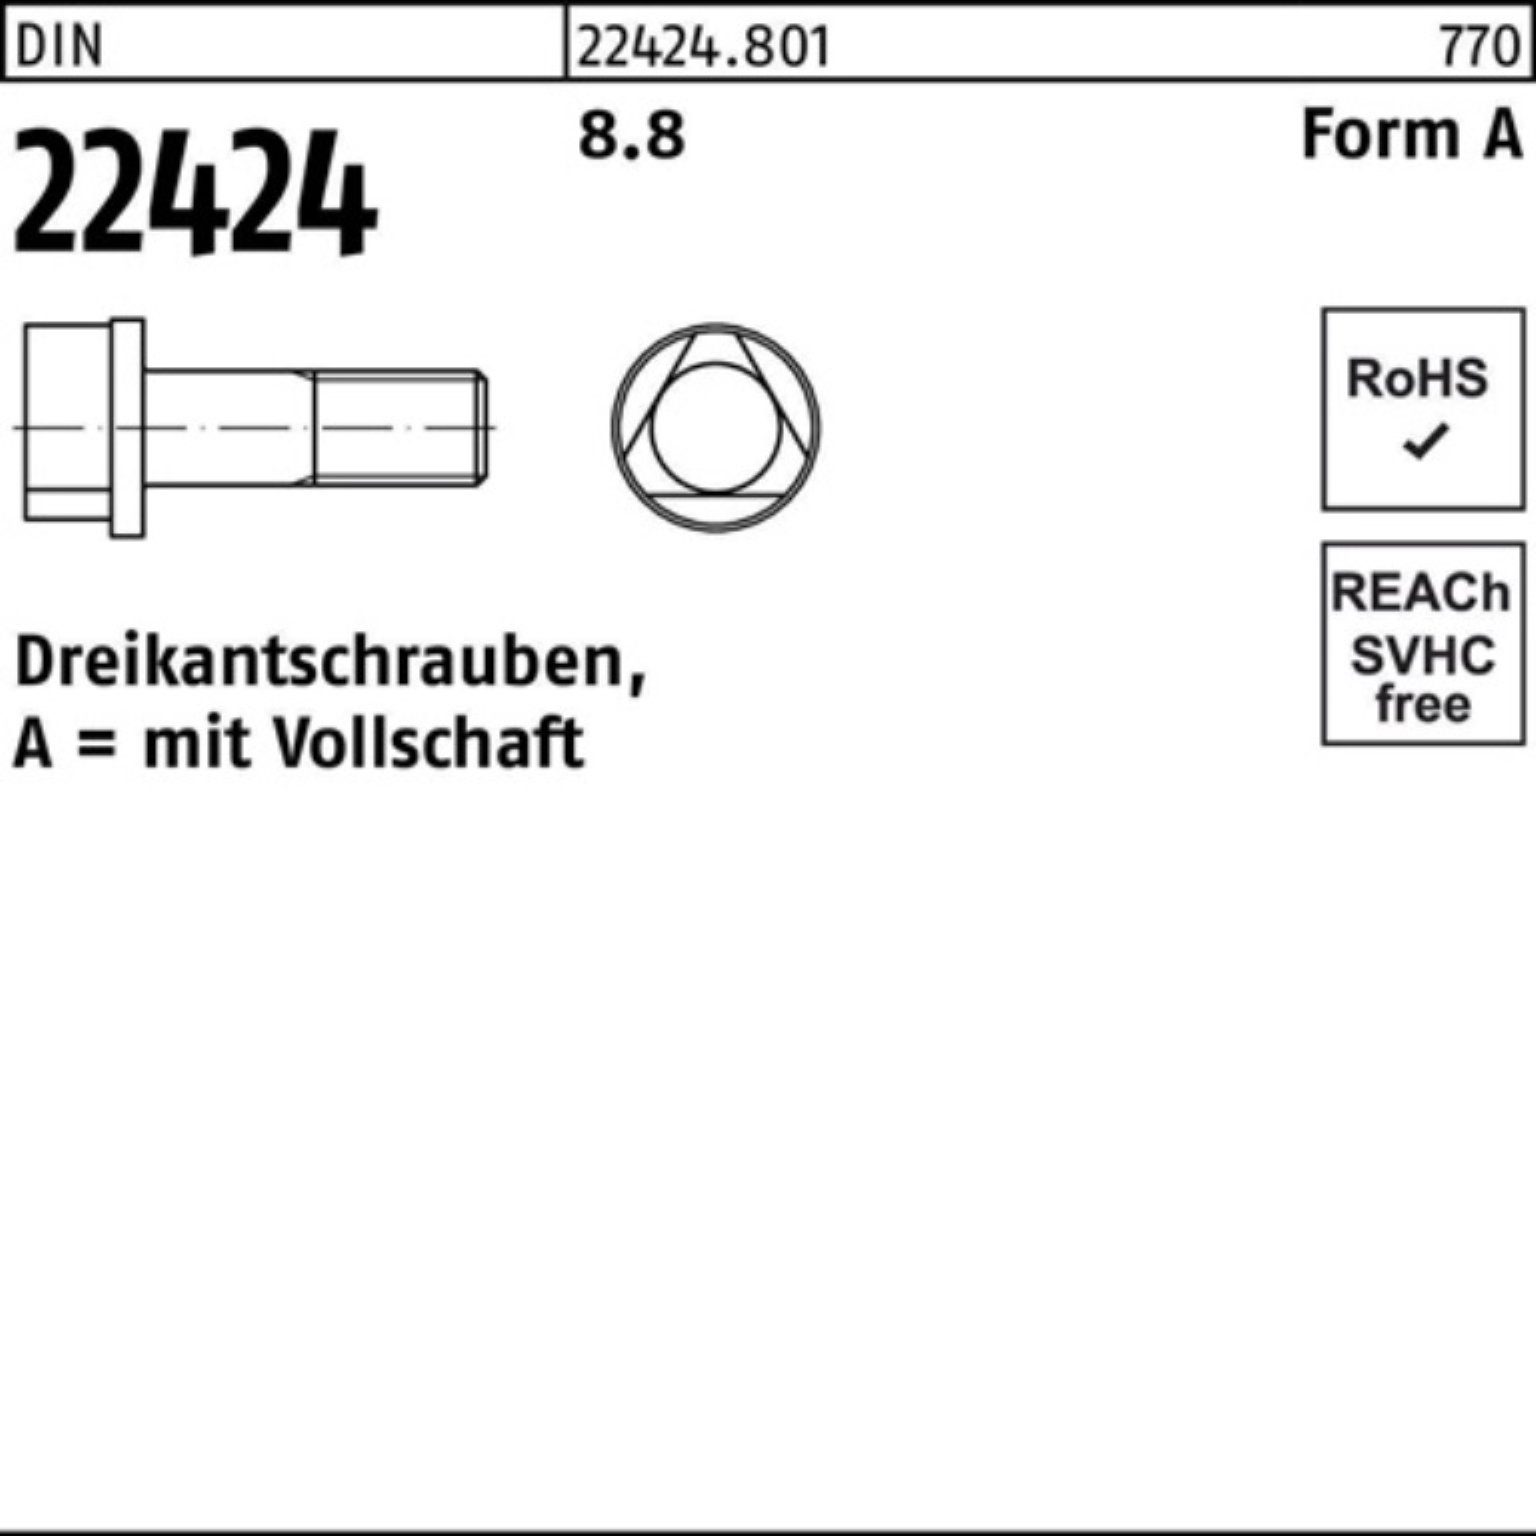 100er Reyher AM Schraube DIN 22424 30 Stück FormA 8.8 8x DI 100 Pack Dreikantschraube